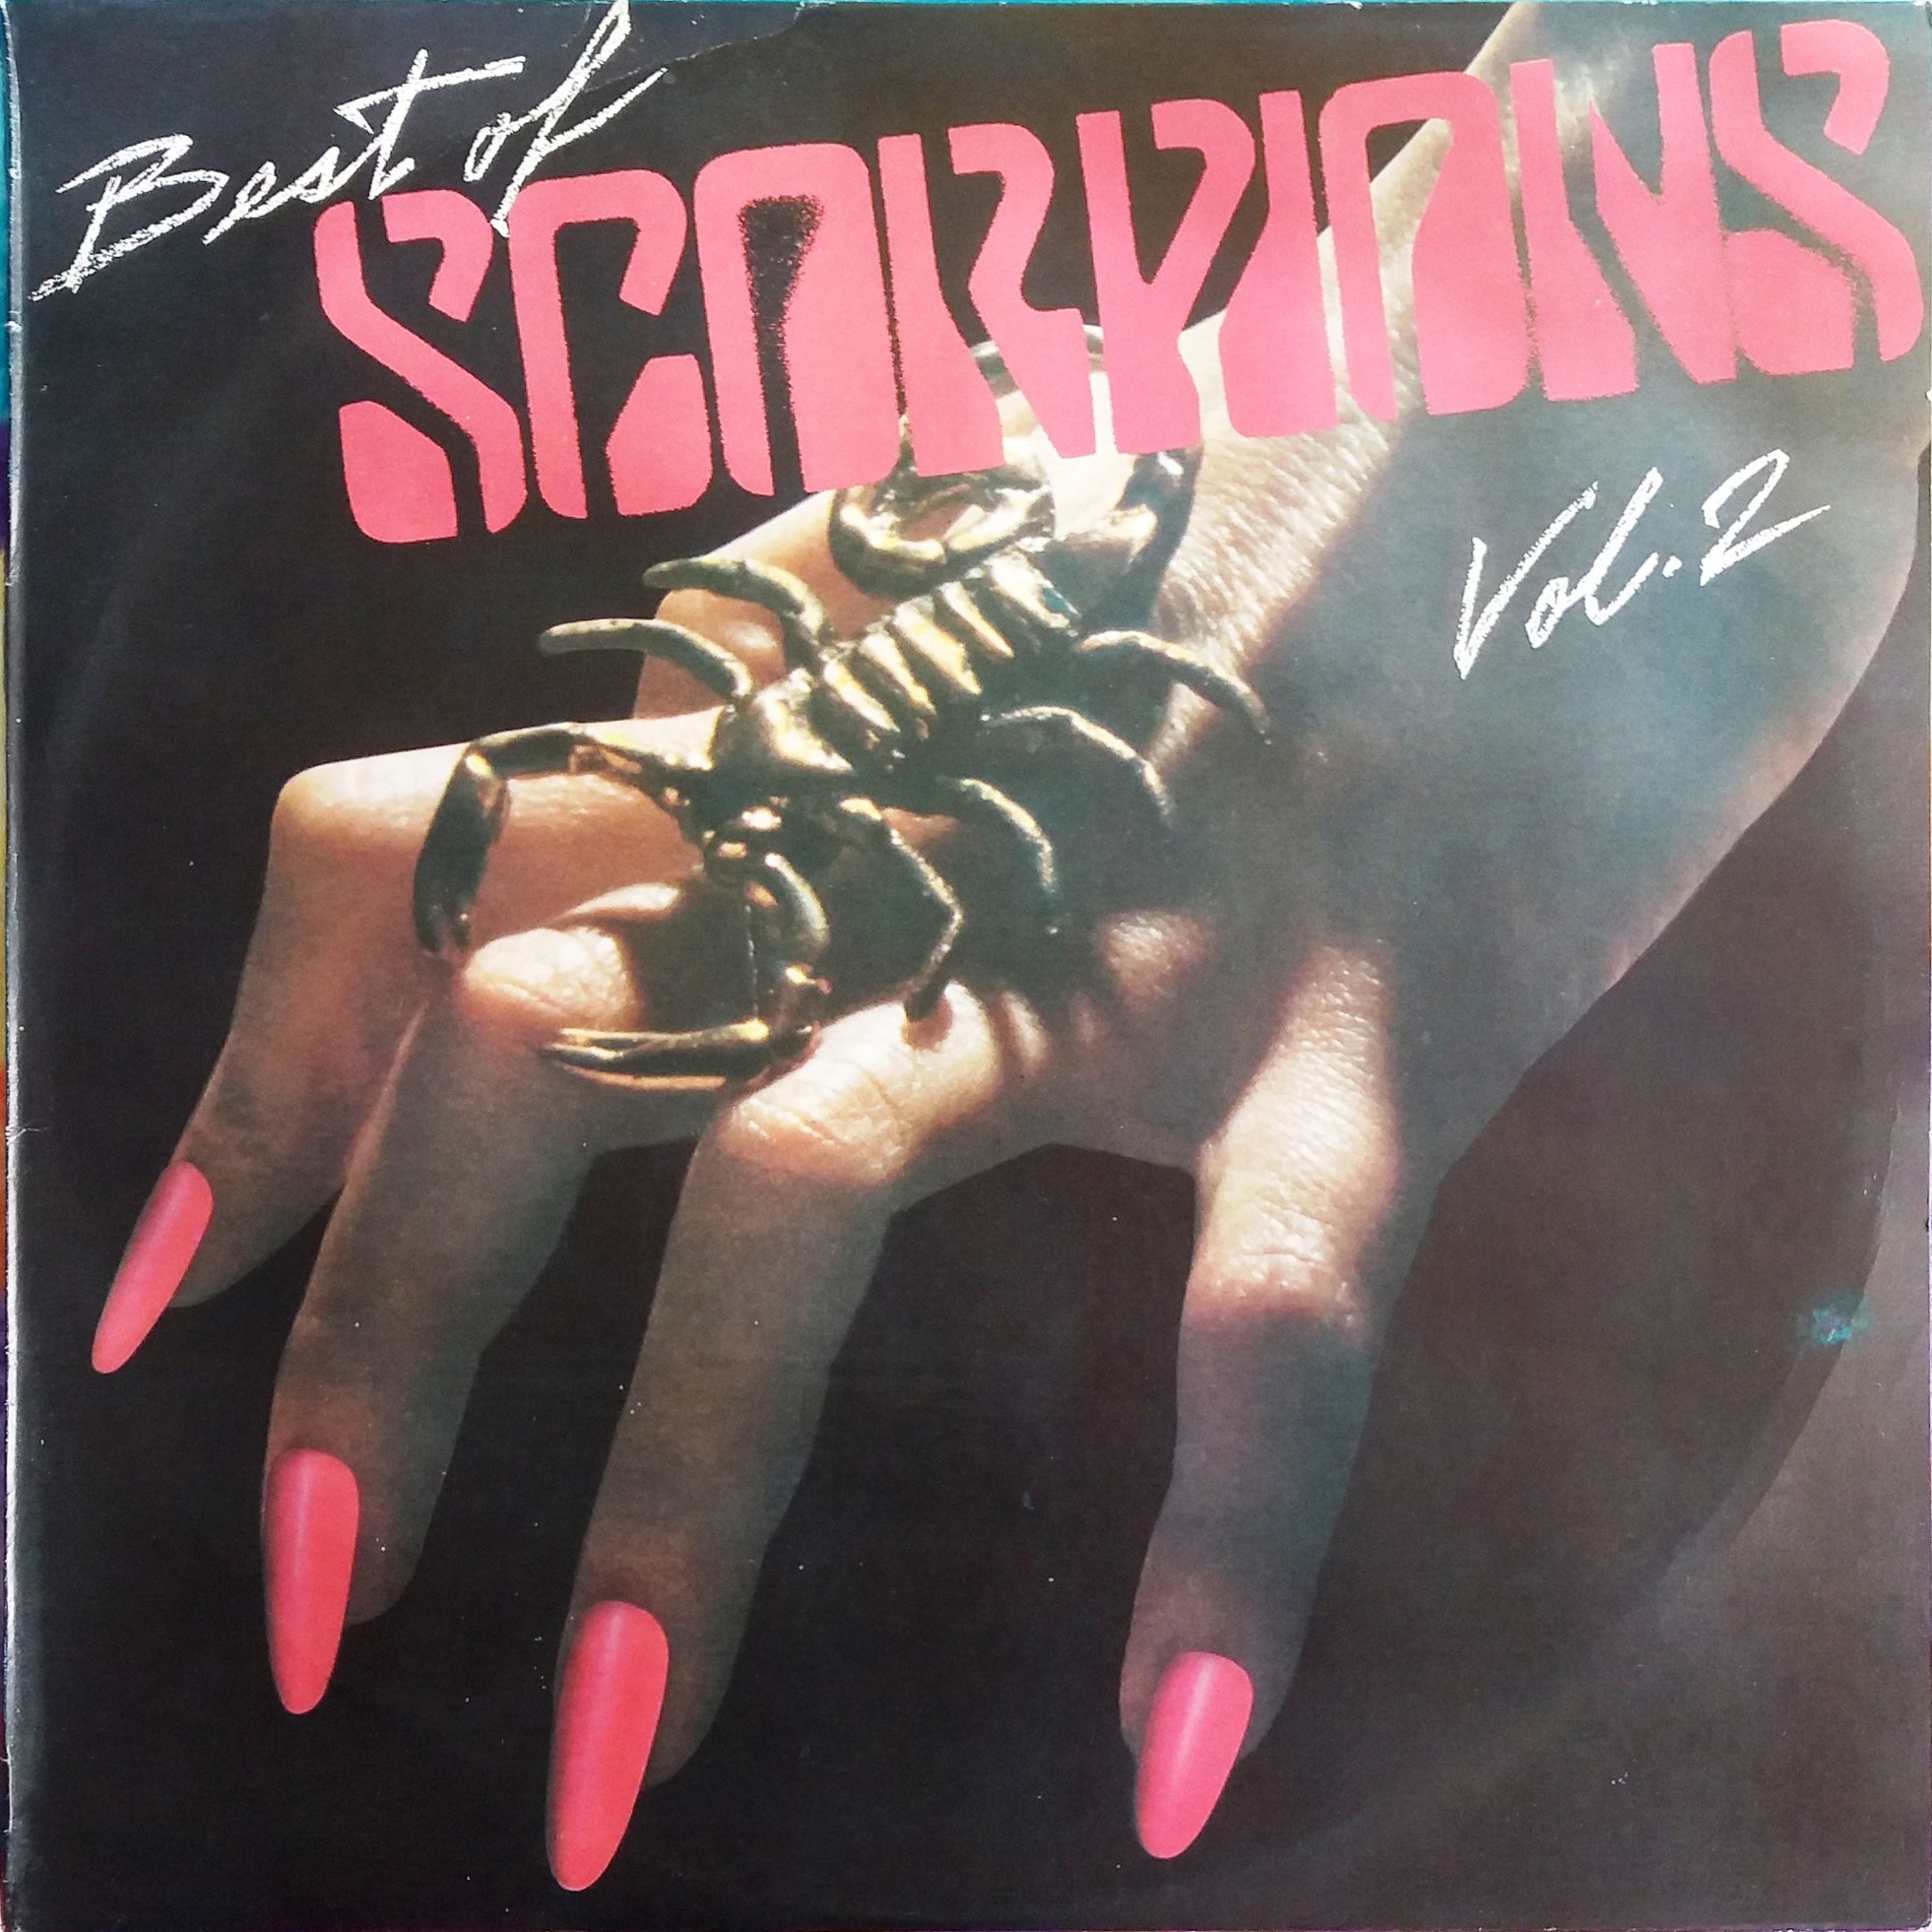 SCORPIONS – The Best Of Scorpions, Vol. 2